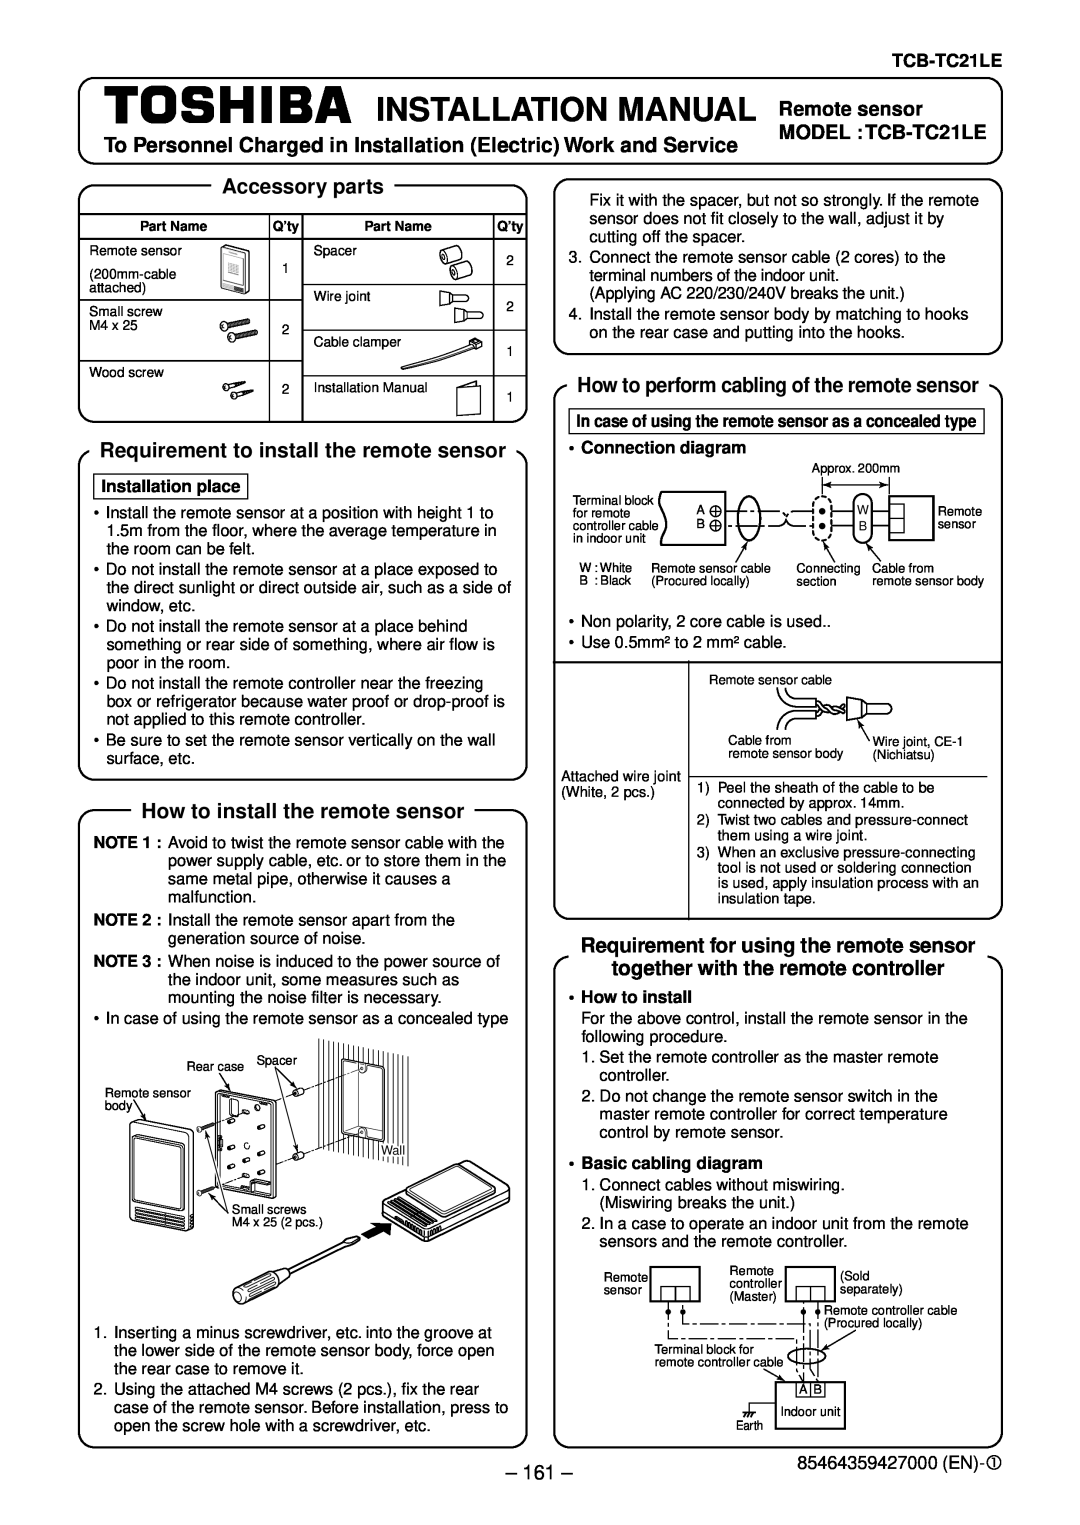 Balcar R410A INSTALLATION MANUAL Remote sensor, MODEL : TCB-TC21LE, Accessory parts, How to install the remote sensor, 161 